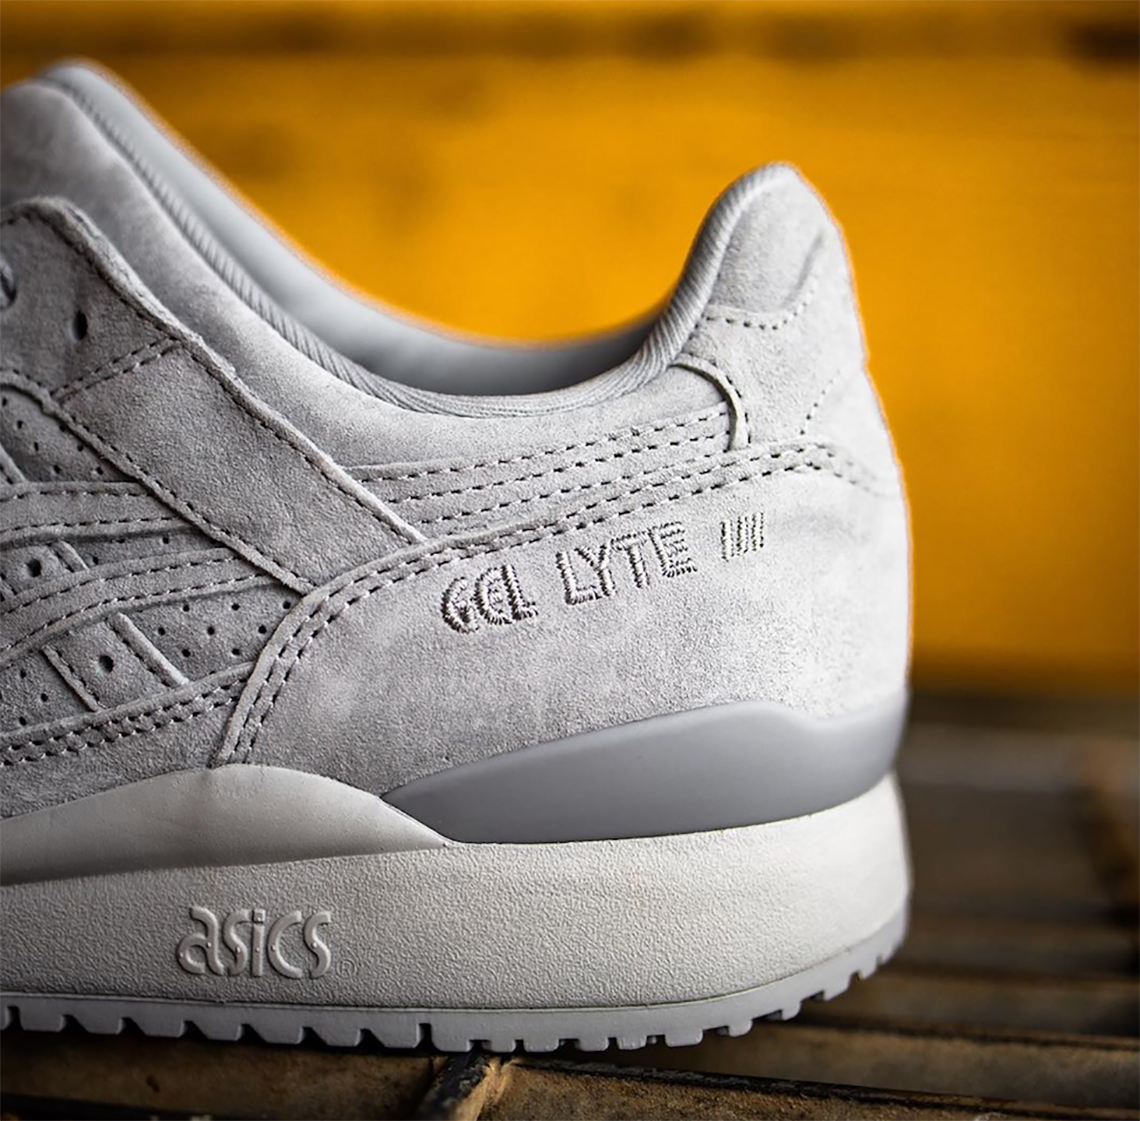 ASICS GEL-Lyte III Piedmont Grey - Release Info | SneakerNews.com